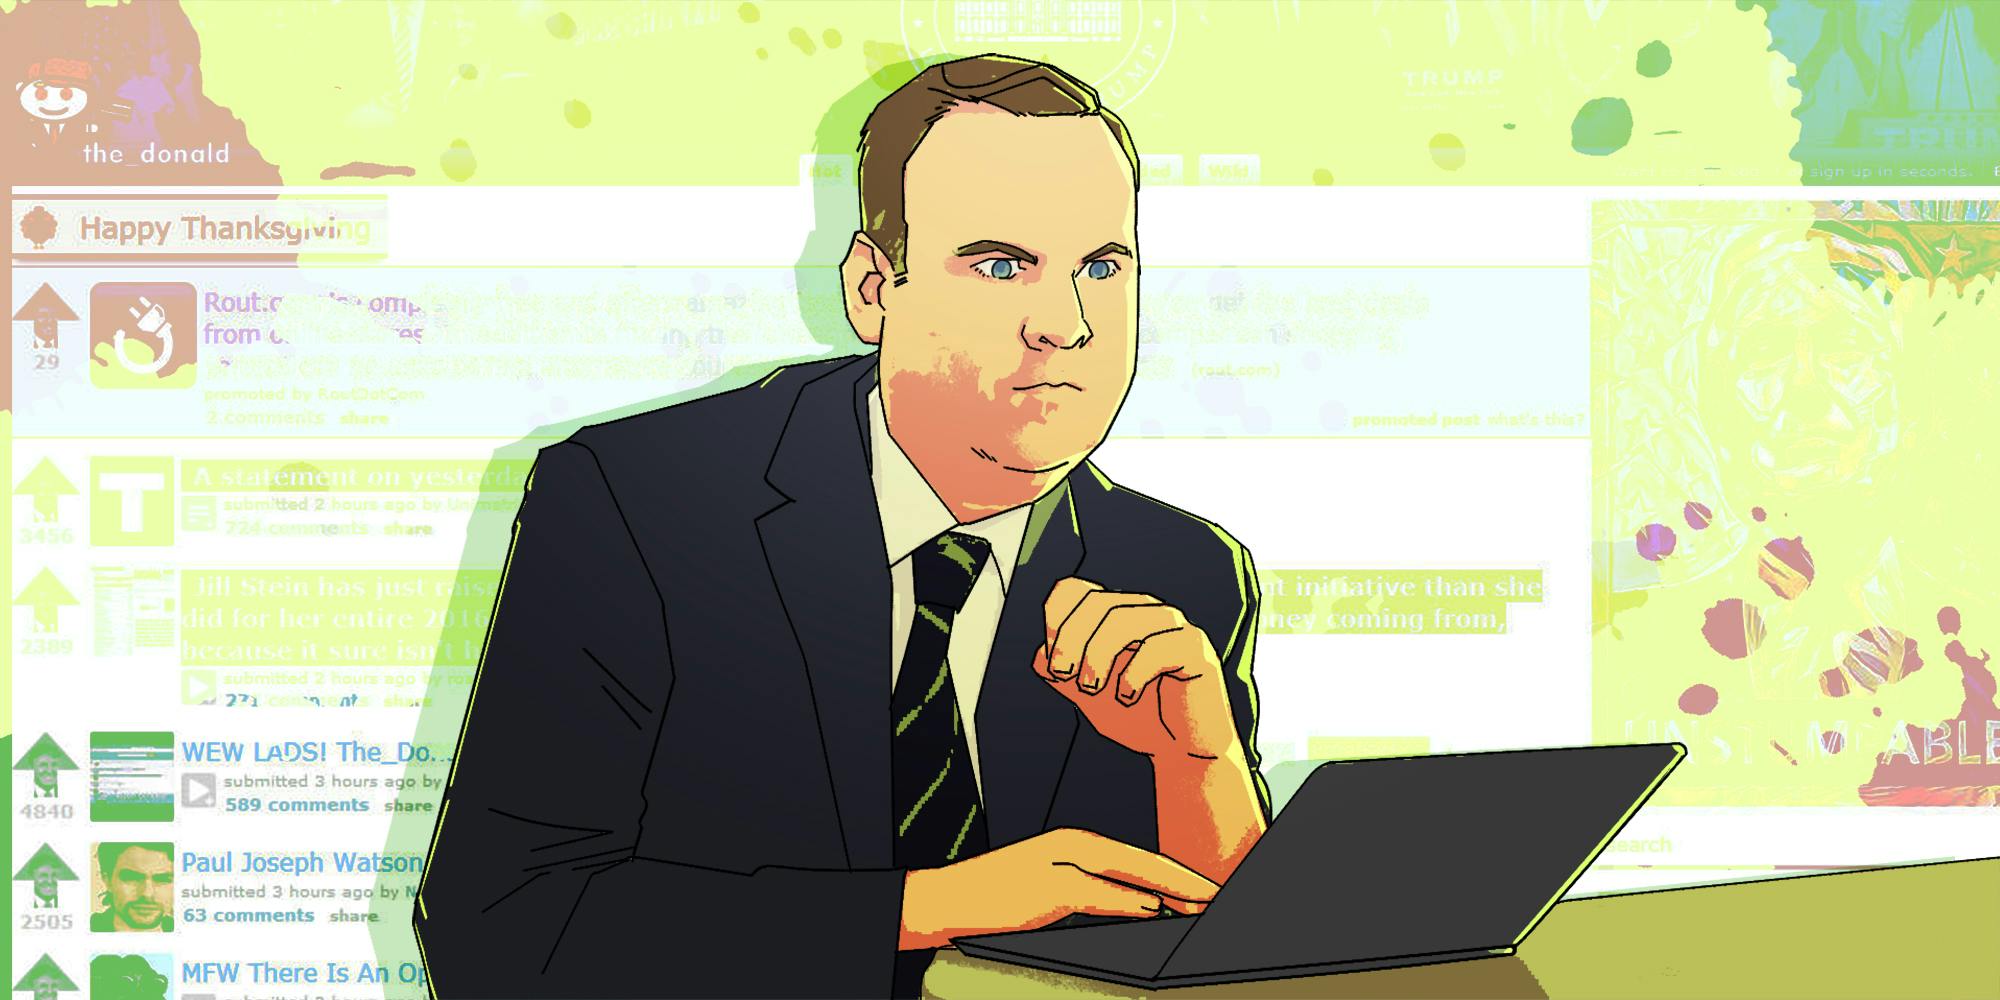 illustration of dan scavino at laptop over subreddit "the donald" background